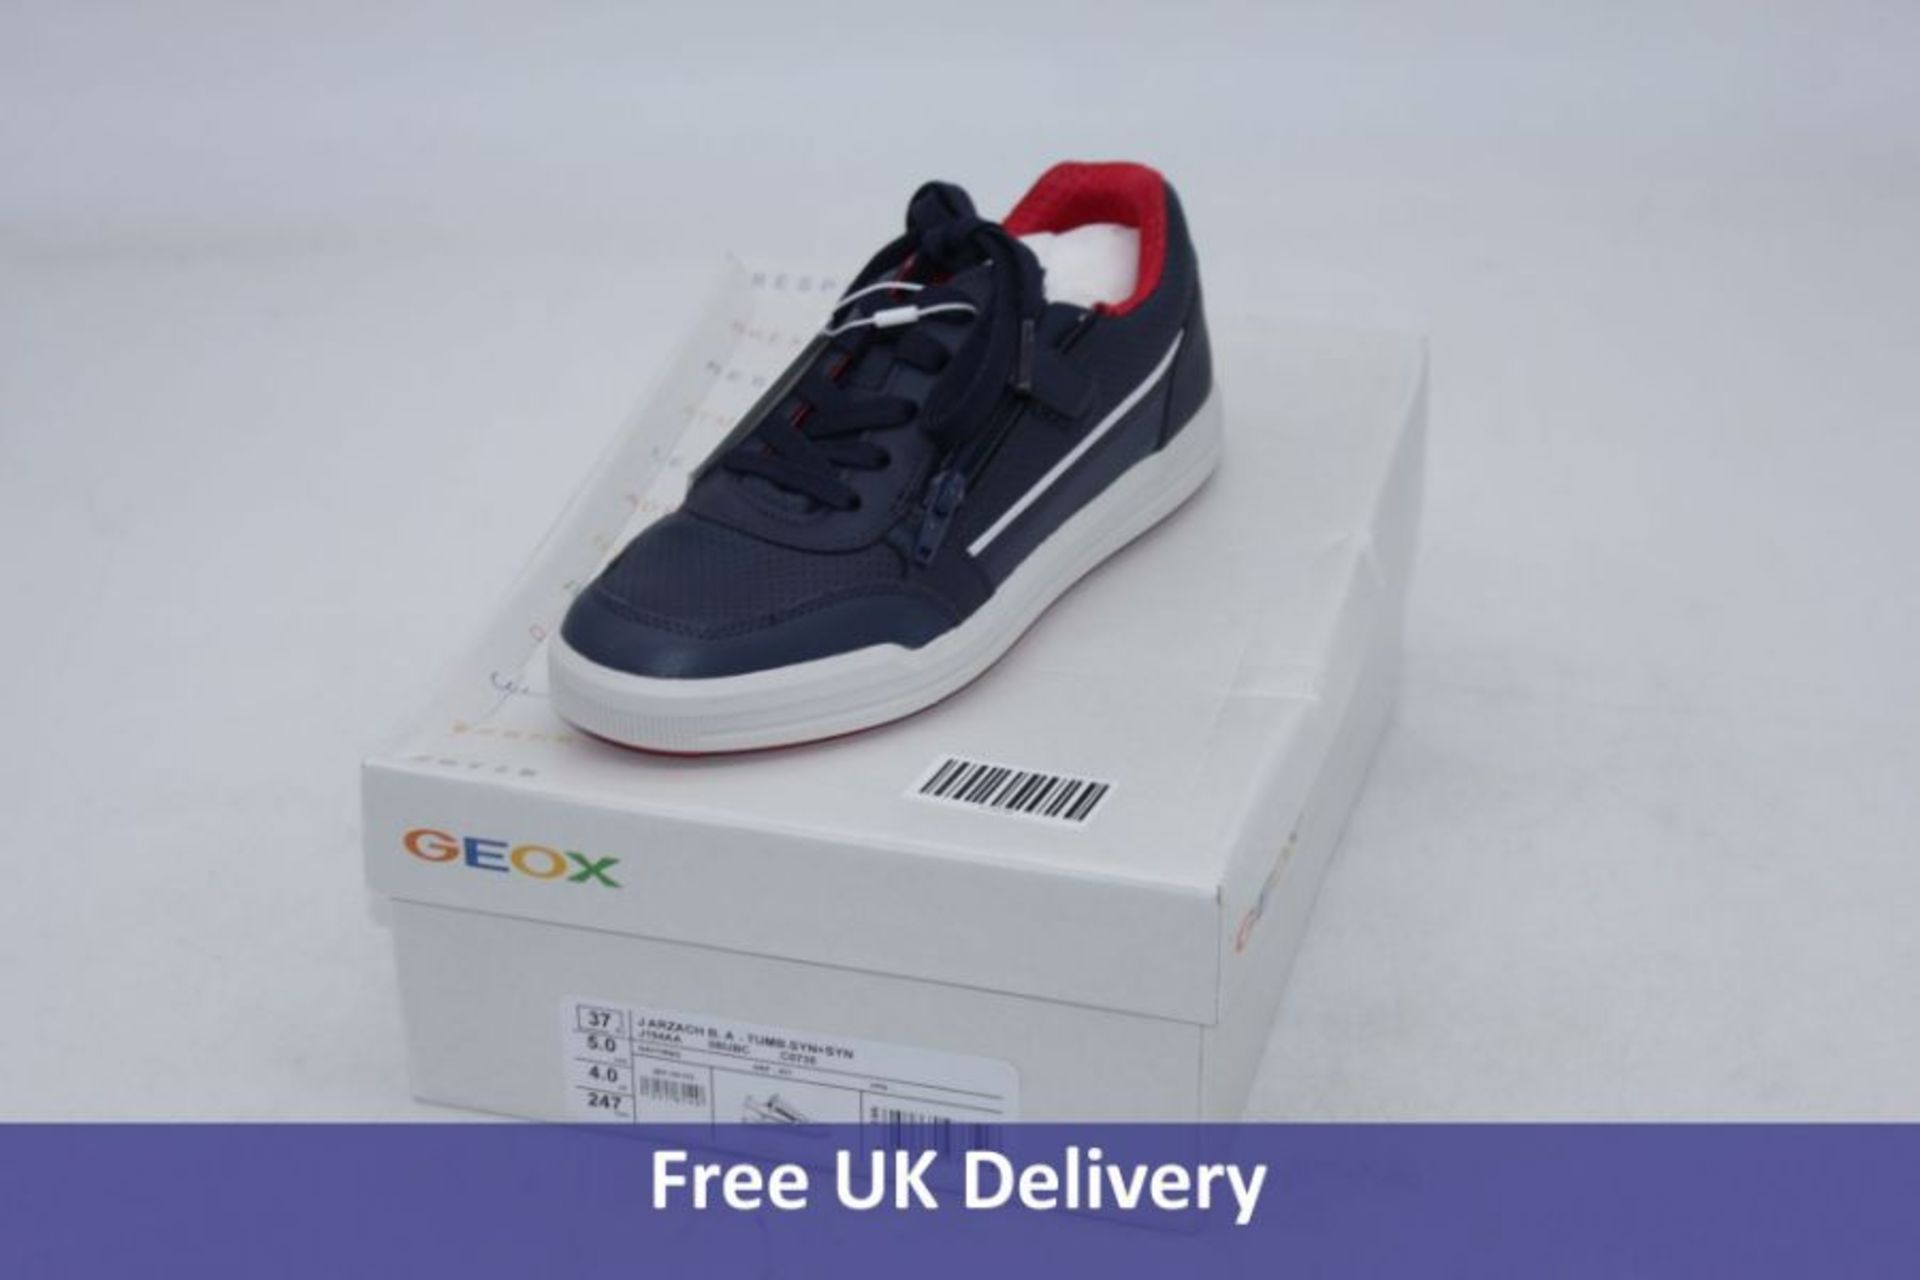 Geox J Arzach Sneaker, Tumb Syn Plus Syn, Navy/Red, UK 4